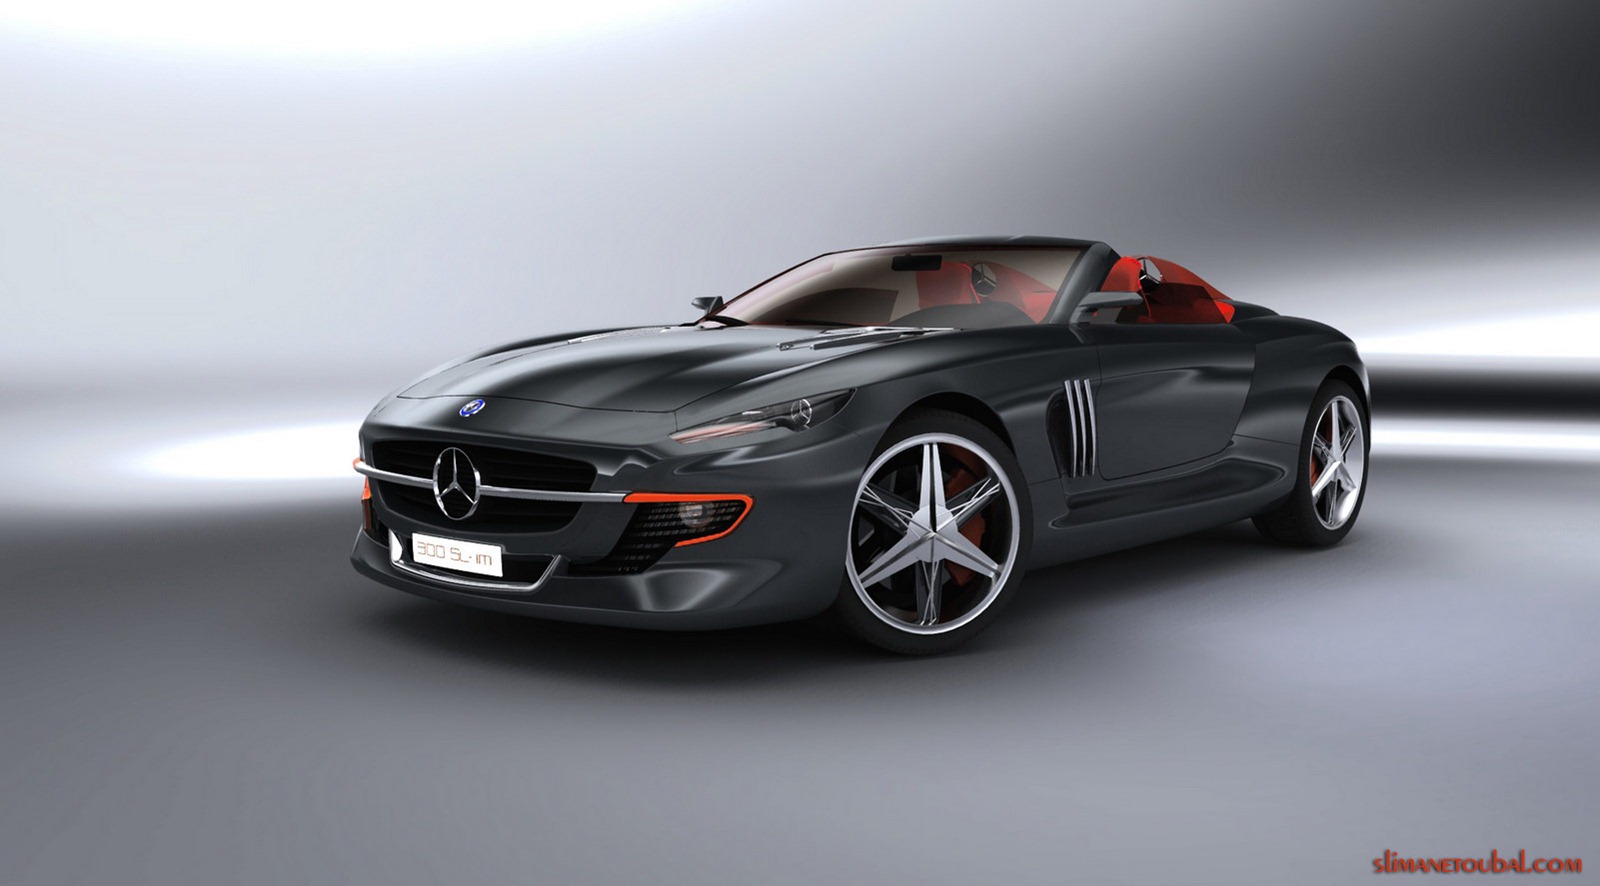 MercedesBenz Concept Cars 2015